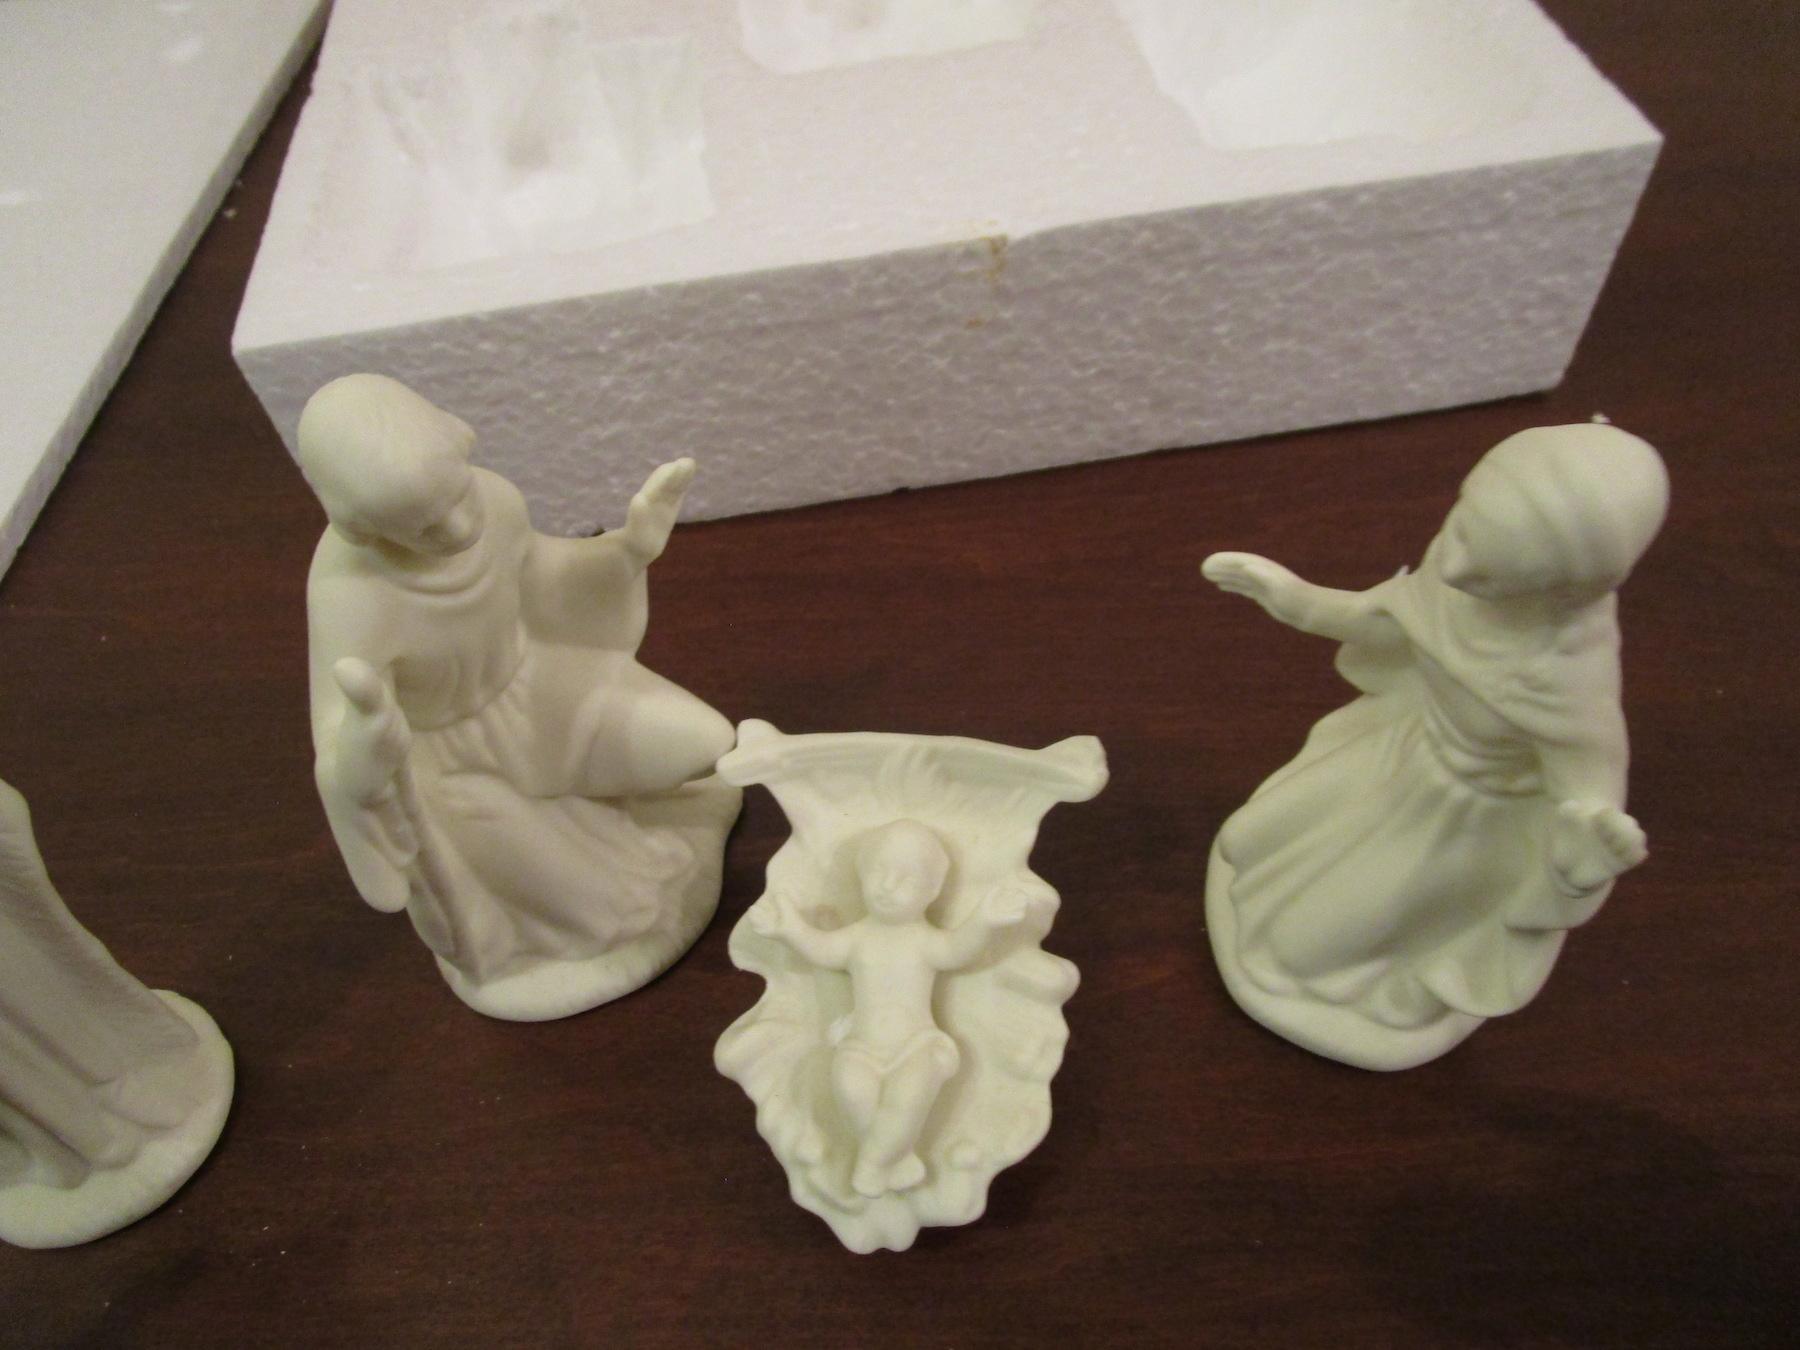 Centurion Collection 6 Piece Nativity Set